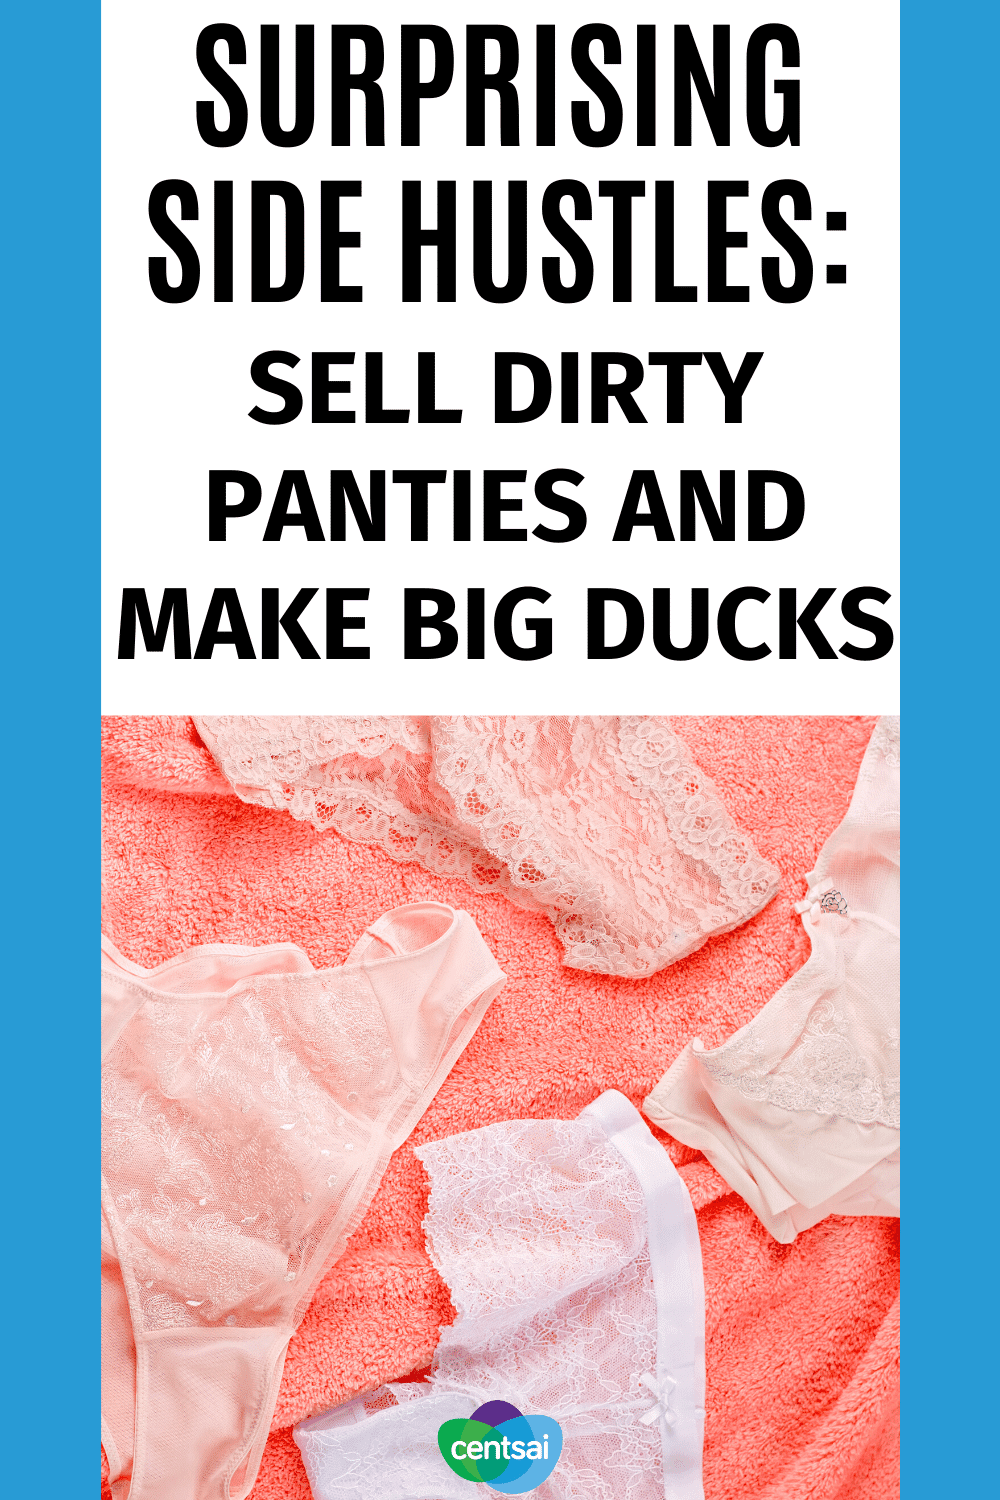 Dirty Panties Reddit